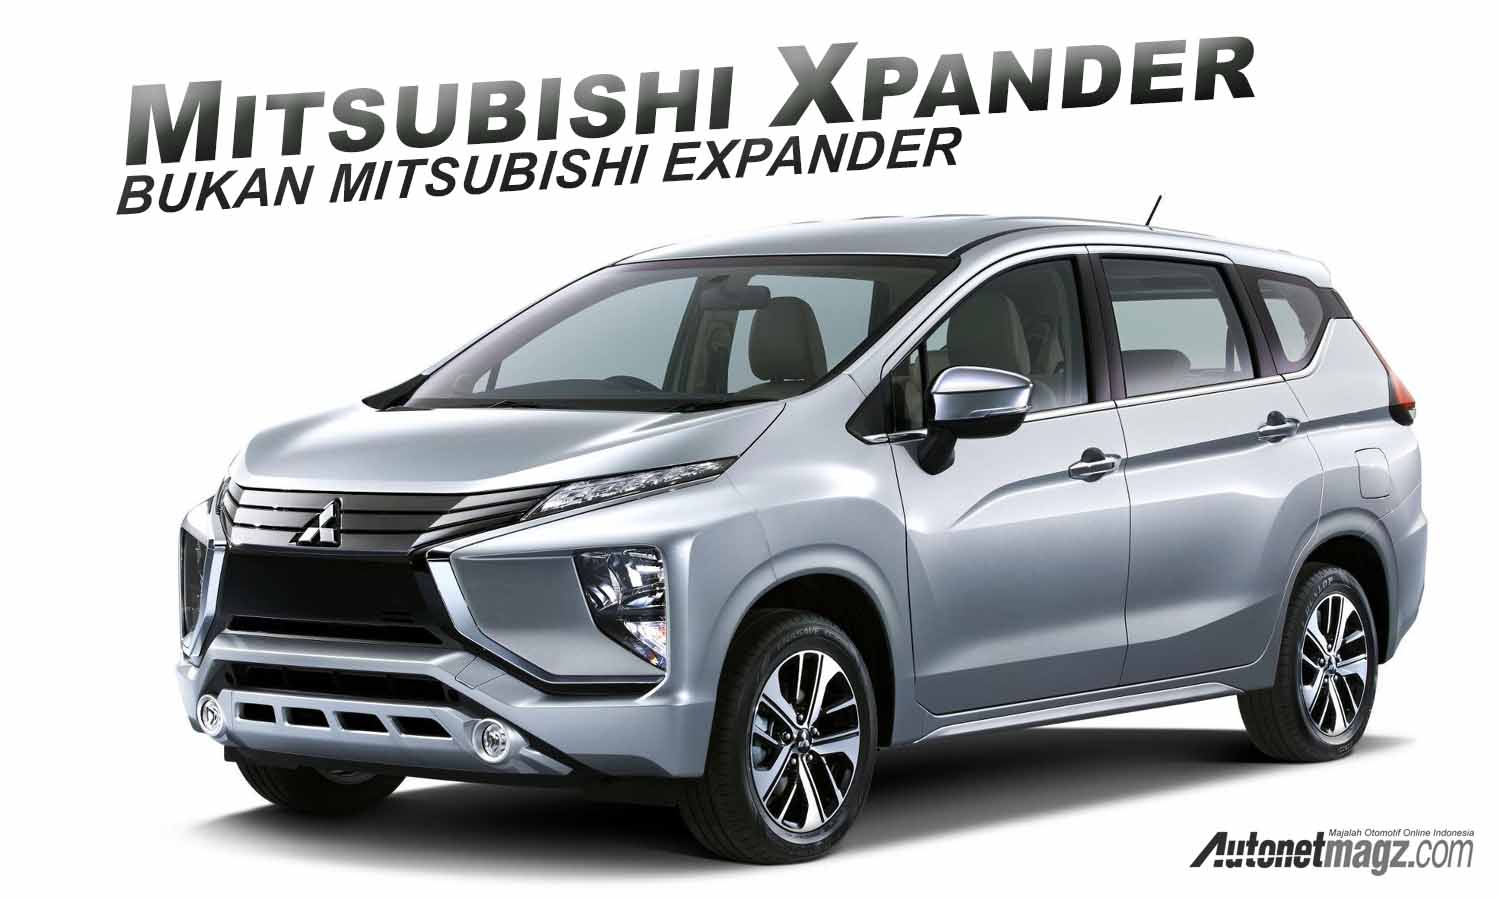 Mitsubishi Xpander Inilah Nama Resminya Bukan Expander AutonetMagz